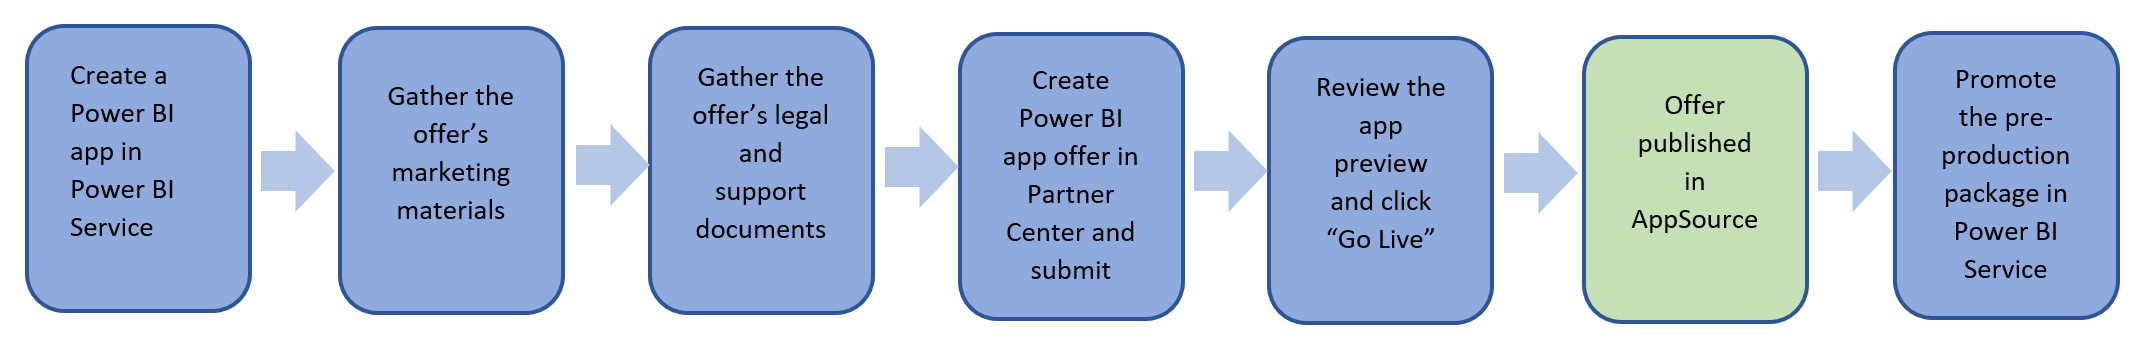 Ringkasan langkah-langkah untuk menerbitkan penawaran aplikasi Power BI.